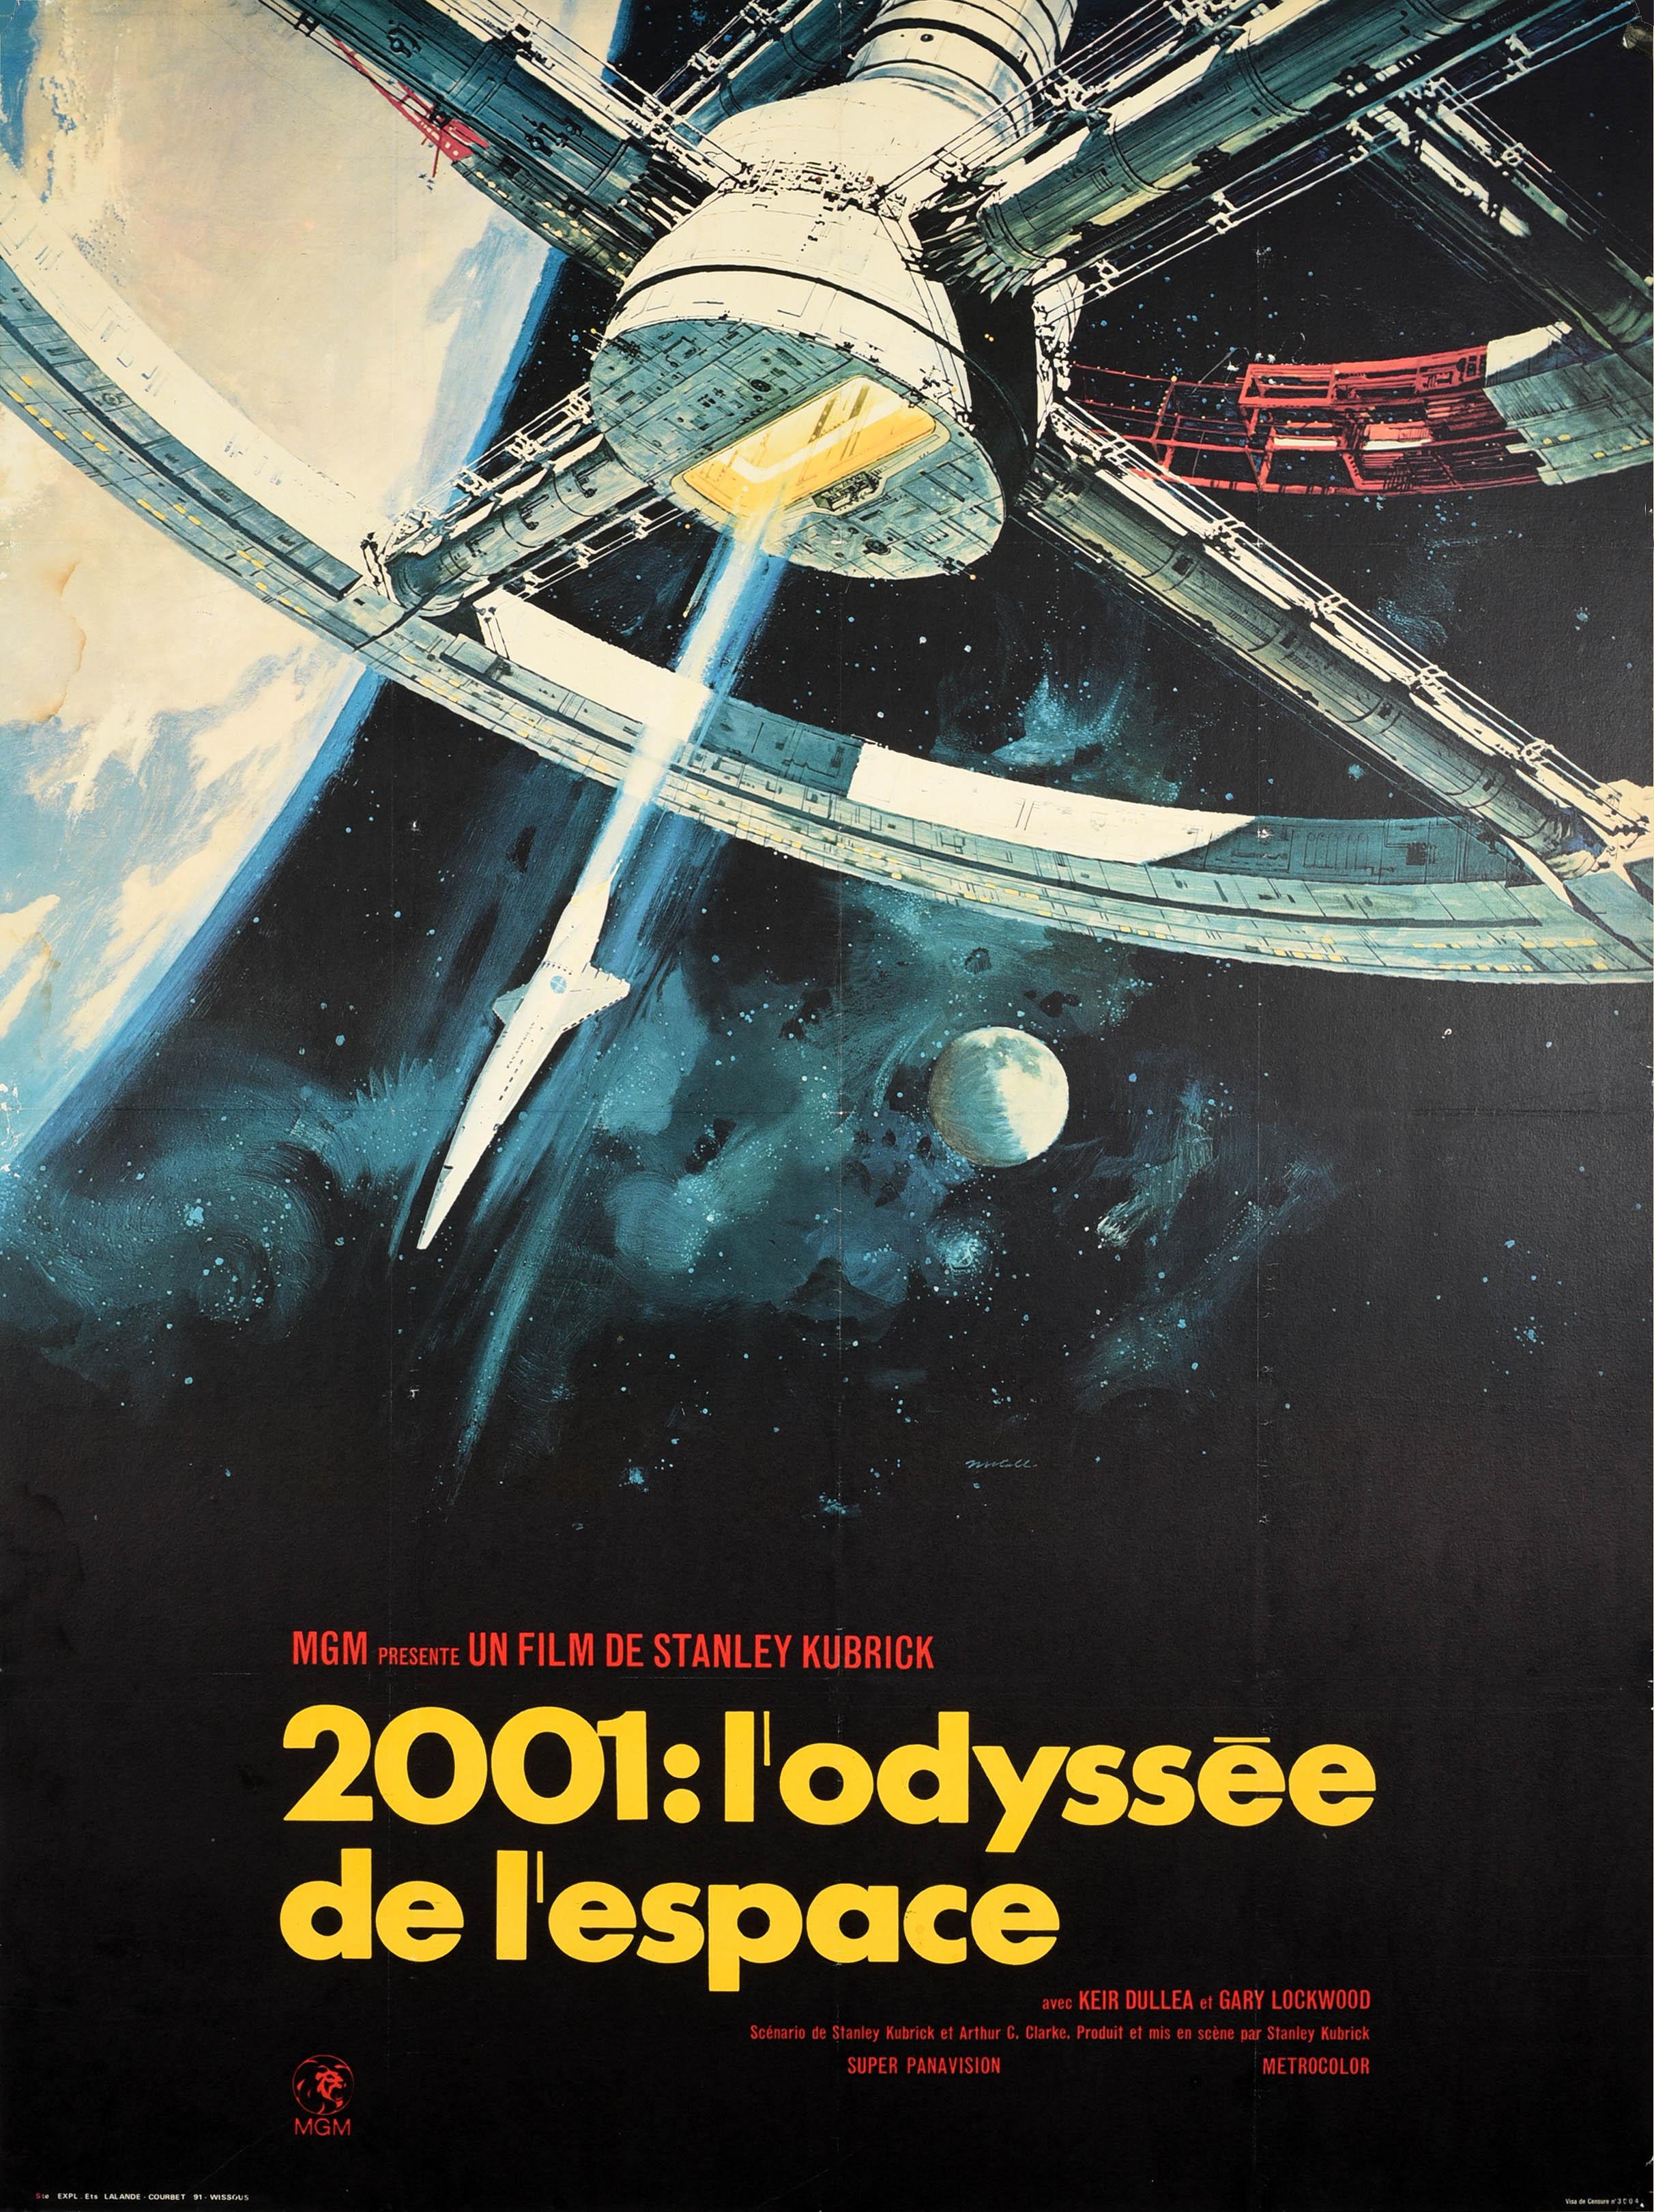 Robert McCall Print - Original Vintage Film Poster 2001: A Space Odyssey Stanley Kubrick Sci-Fi Movie